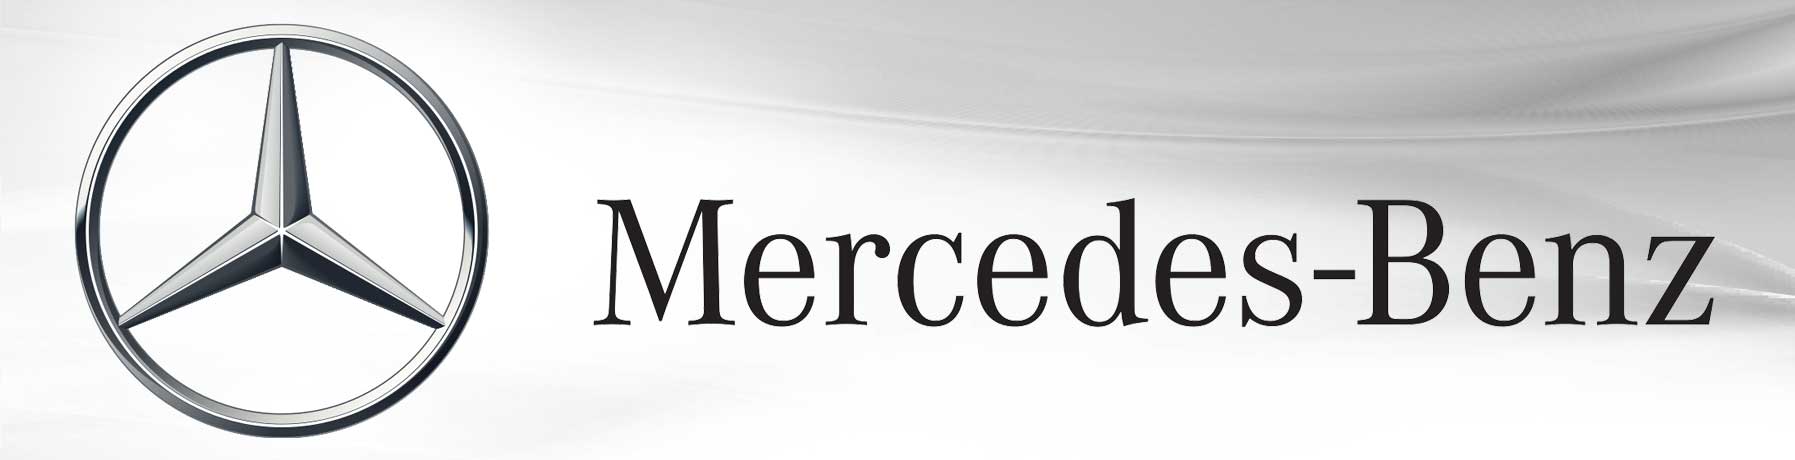 mercedes.banner.jpg (1795×460)